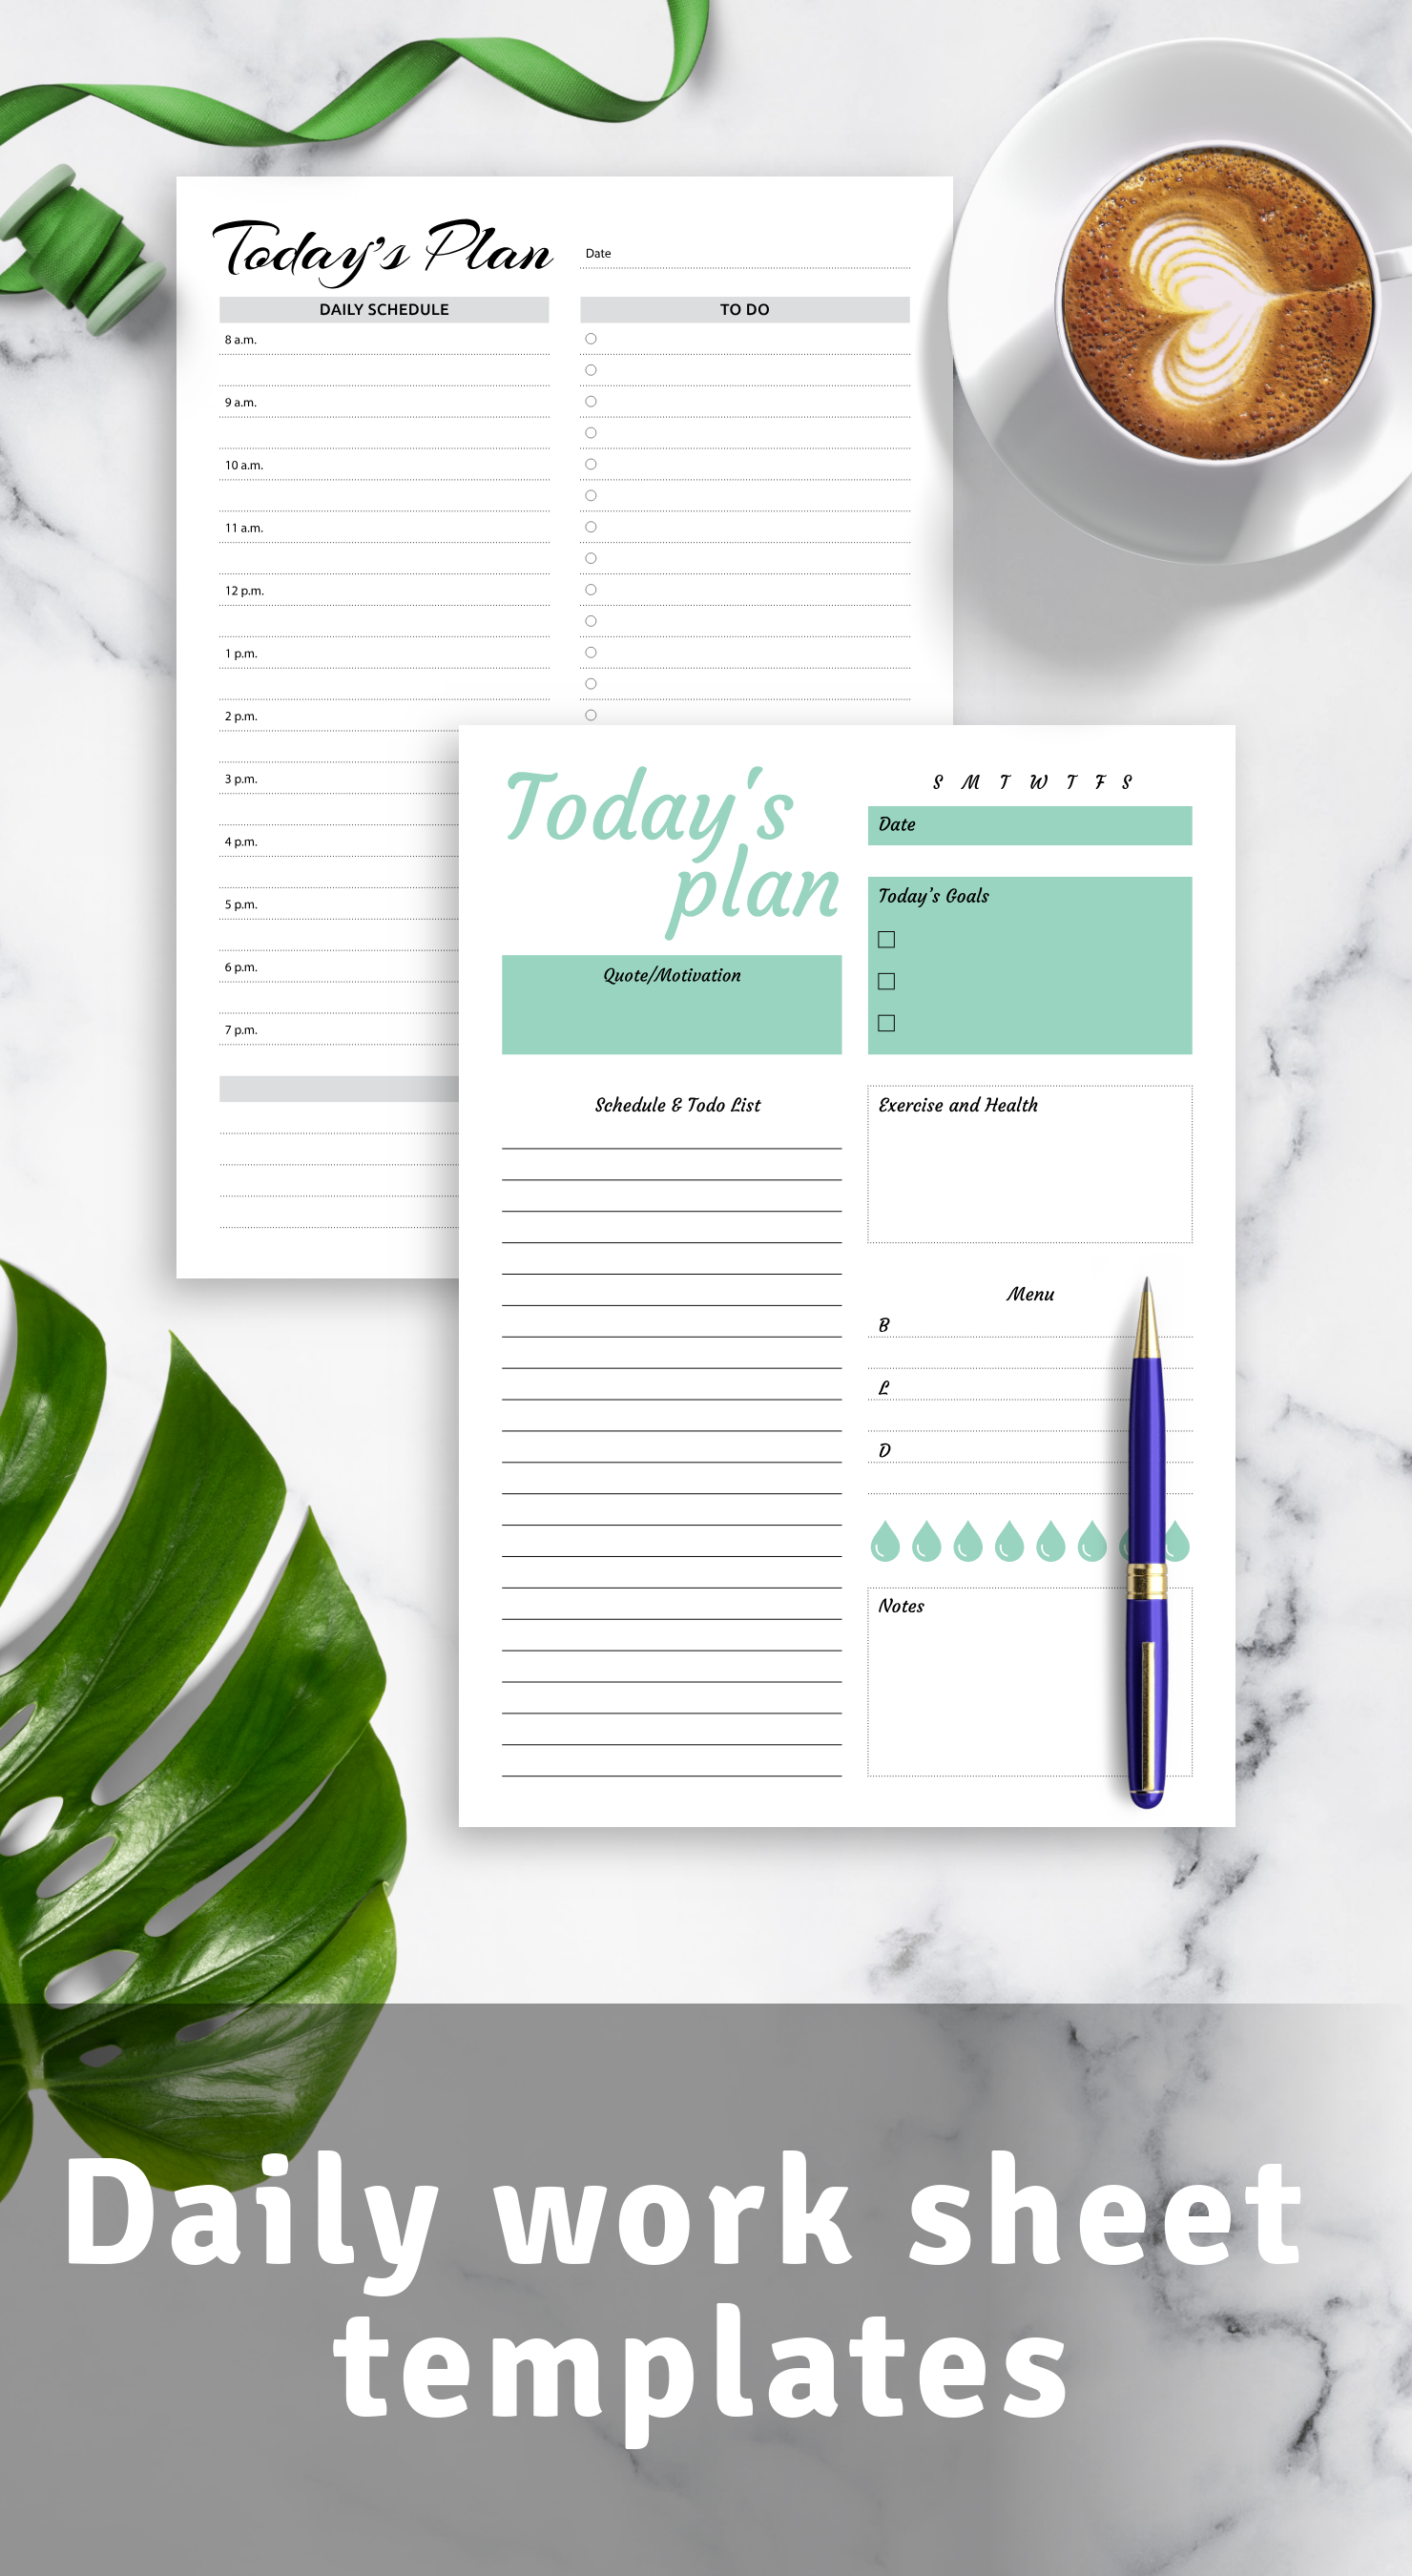 Get printable daily work sheet templates